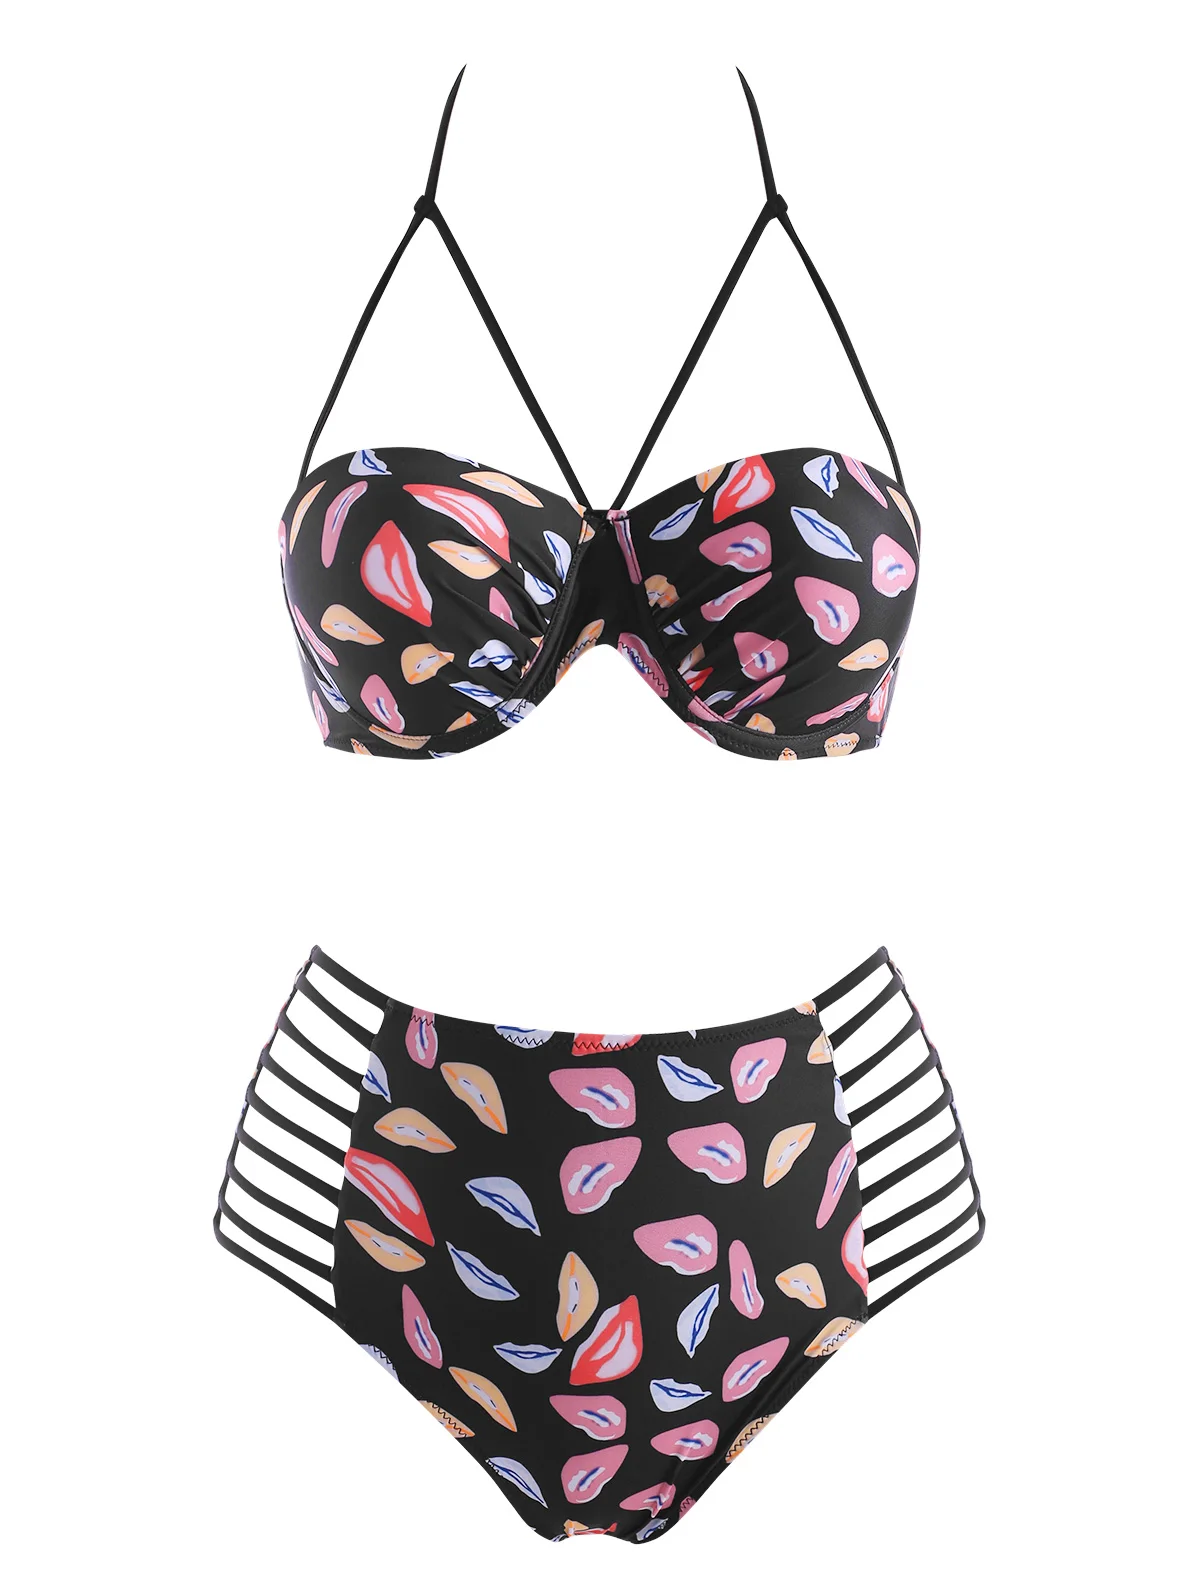 

Lip Print High Waisted Bikini Split Swimwear Push Up Ladder Cutout Halter Underwire Beachwear Female Triangle Swimsuit Biquinis